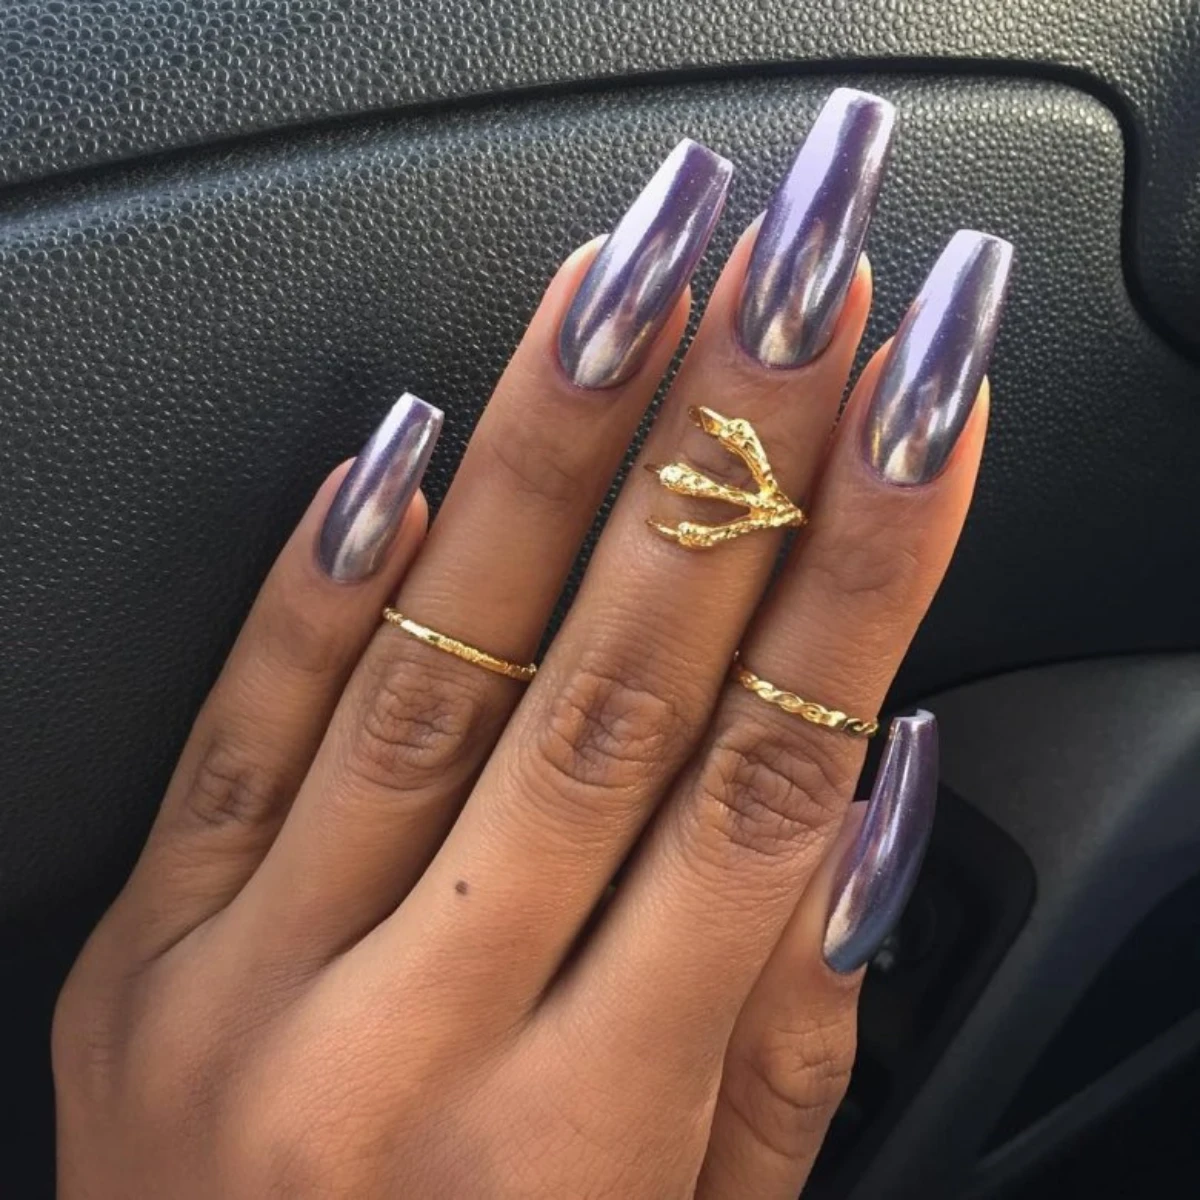 lavendel metallic nails